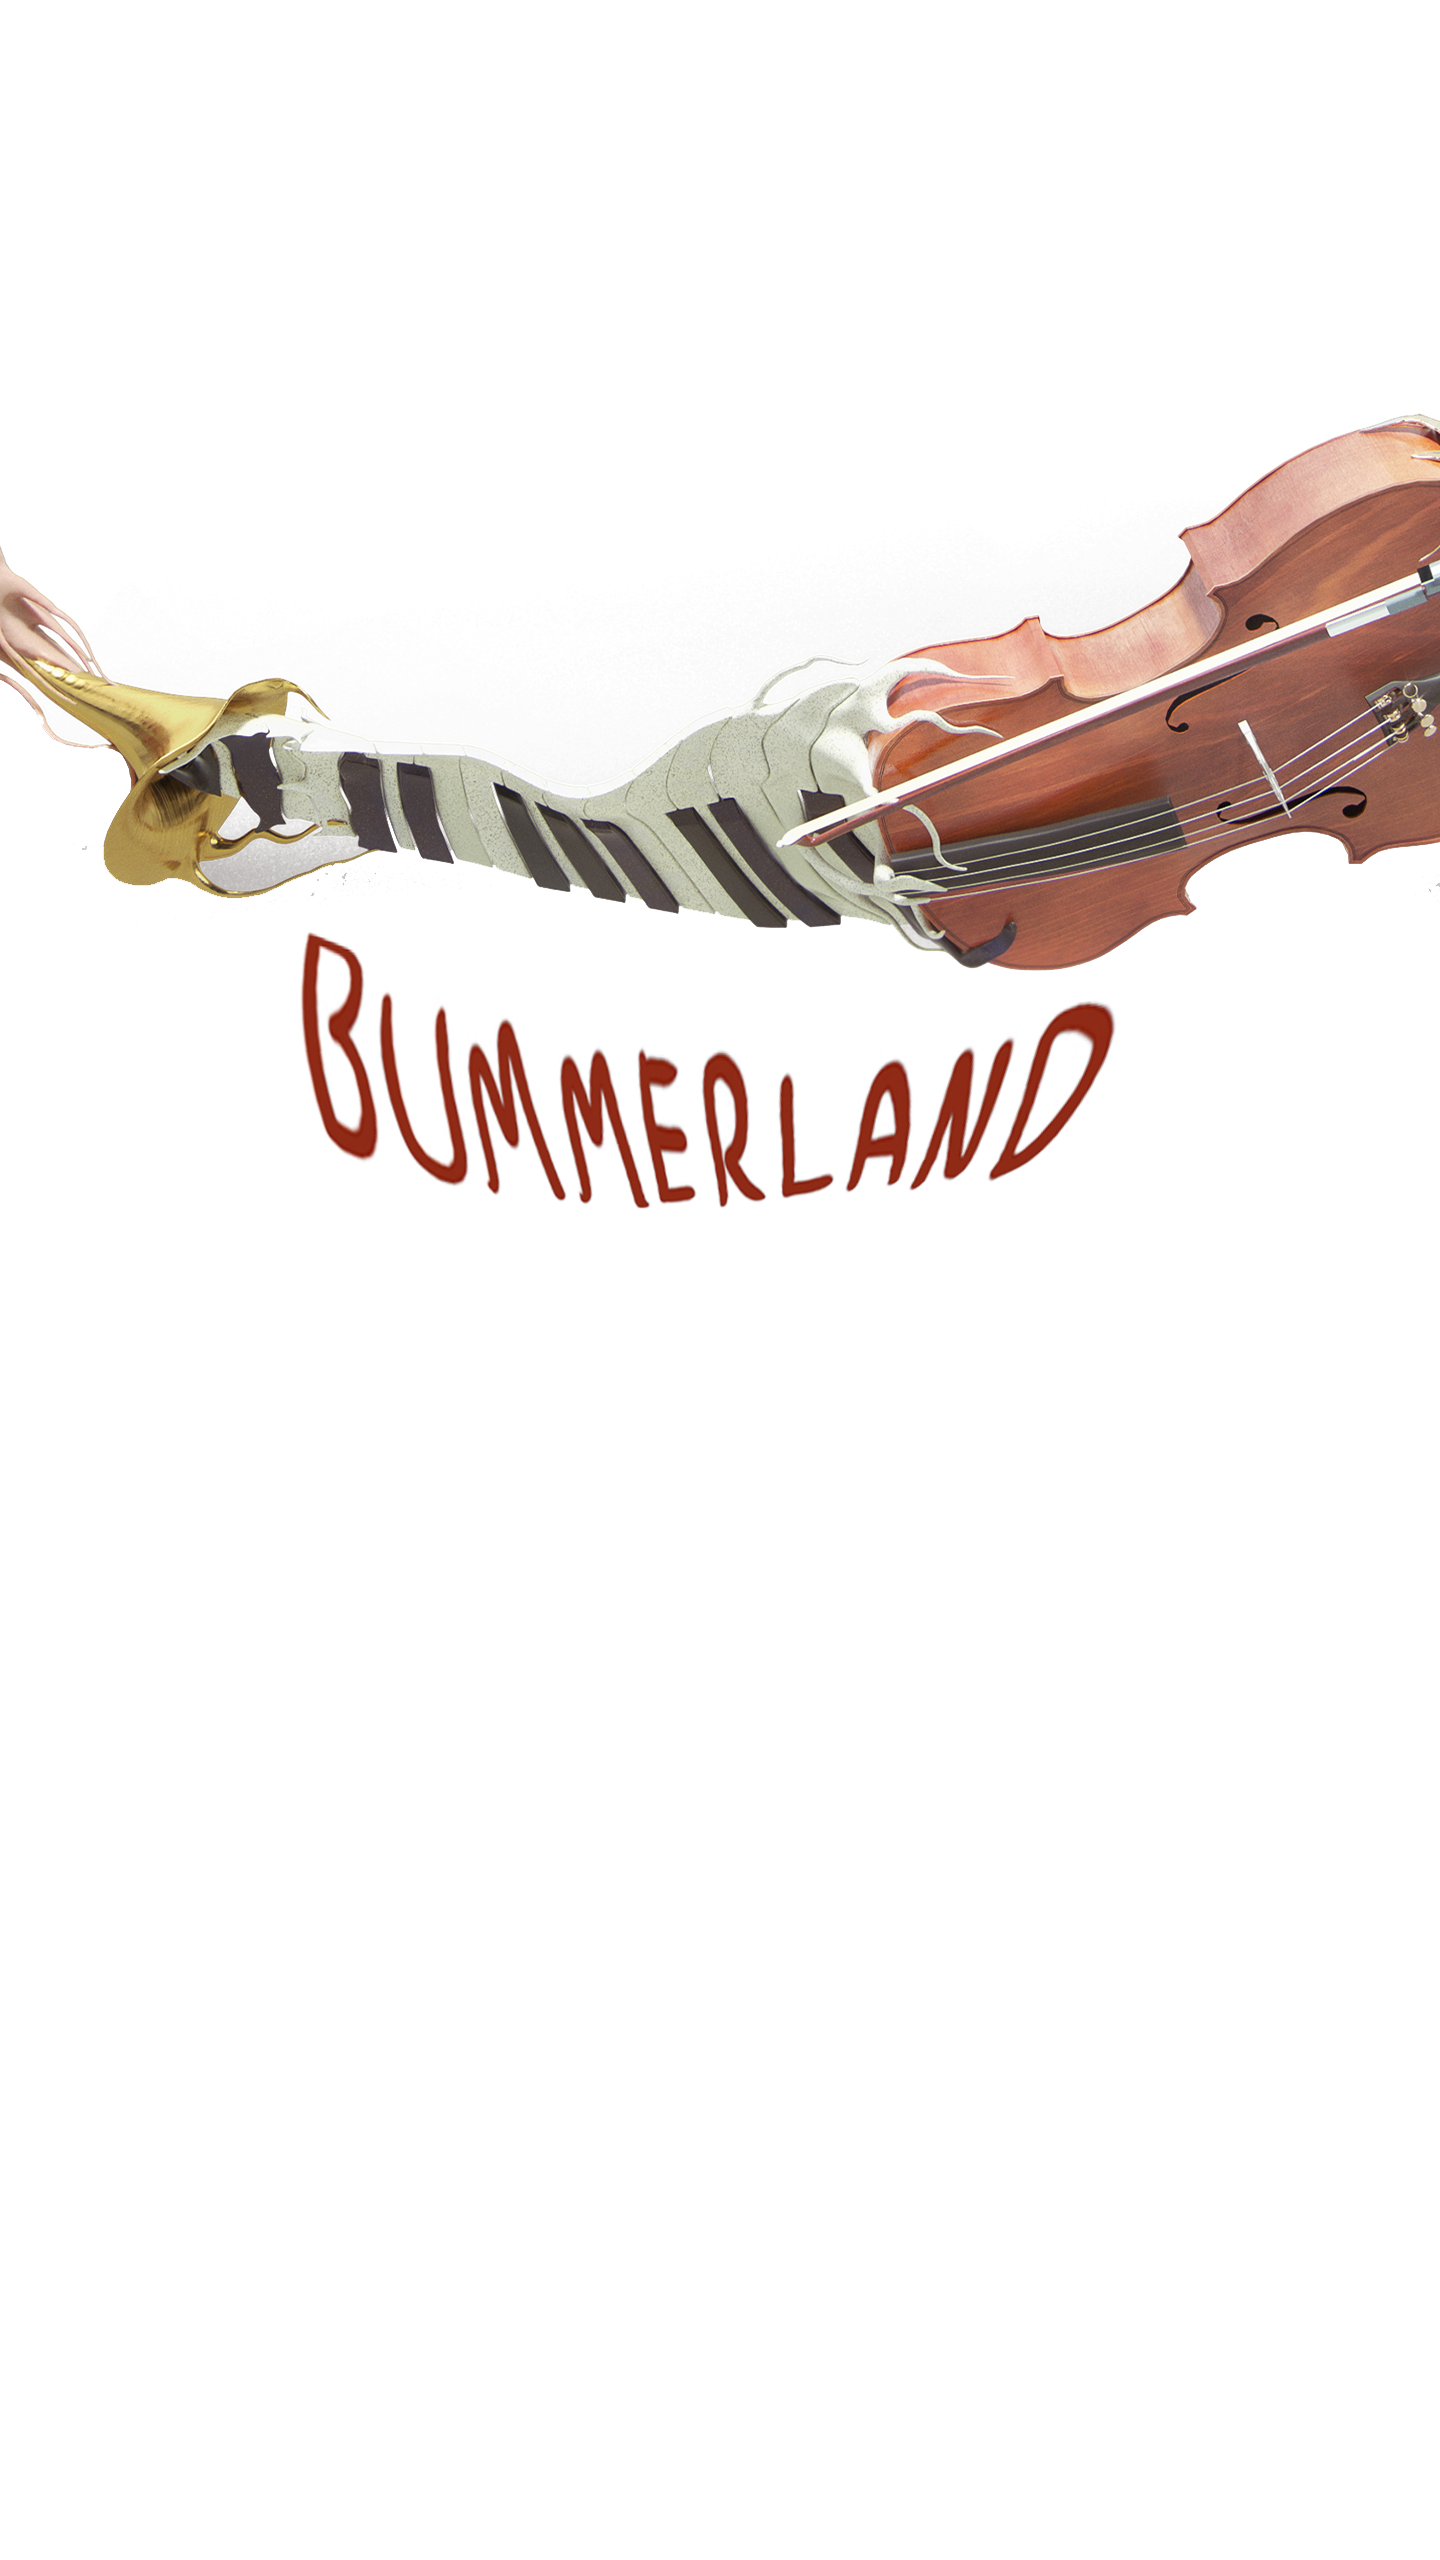 bummerland wallpaper i made!!: AJR